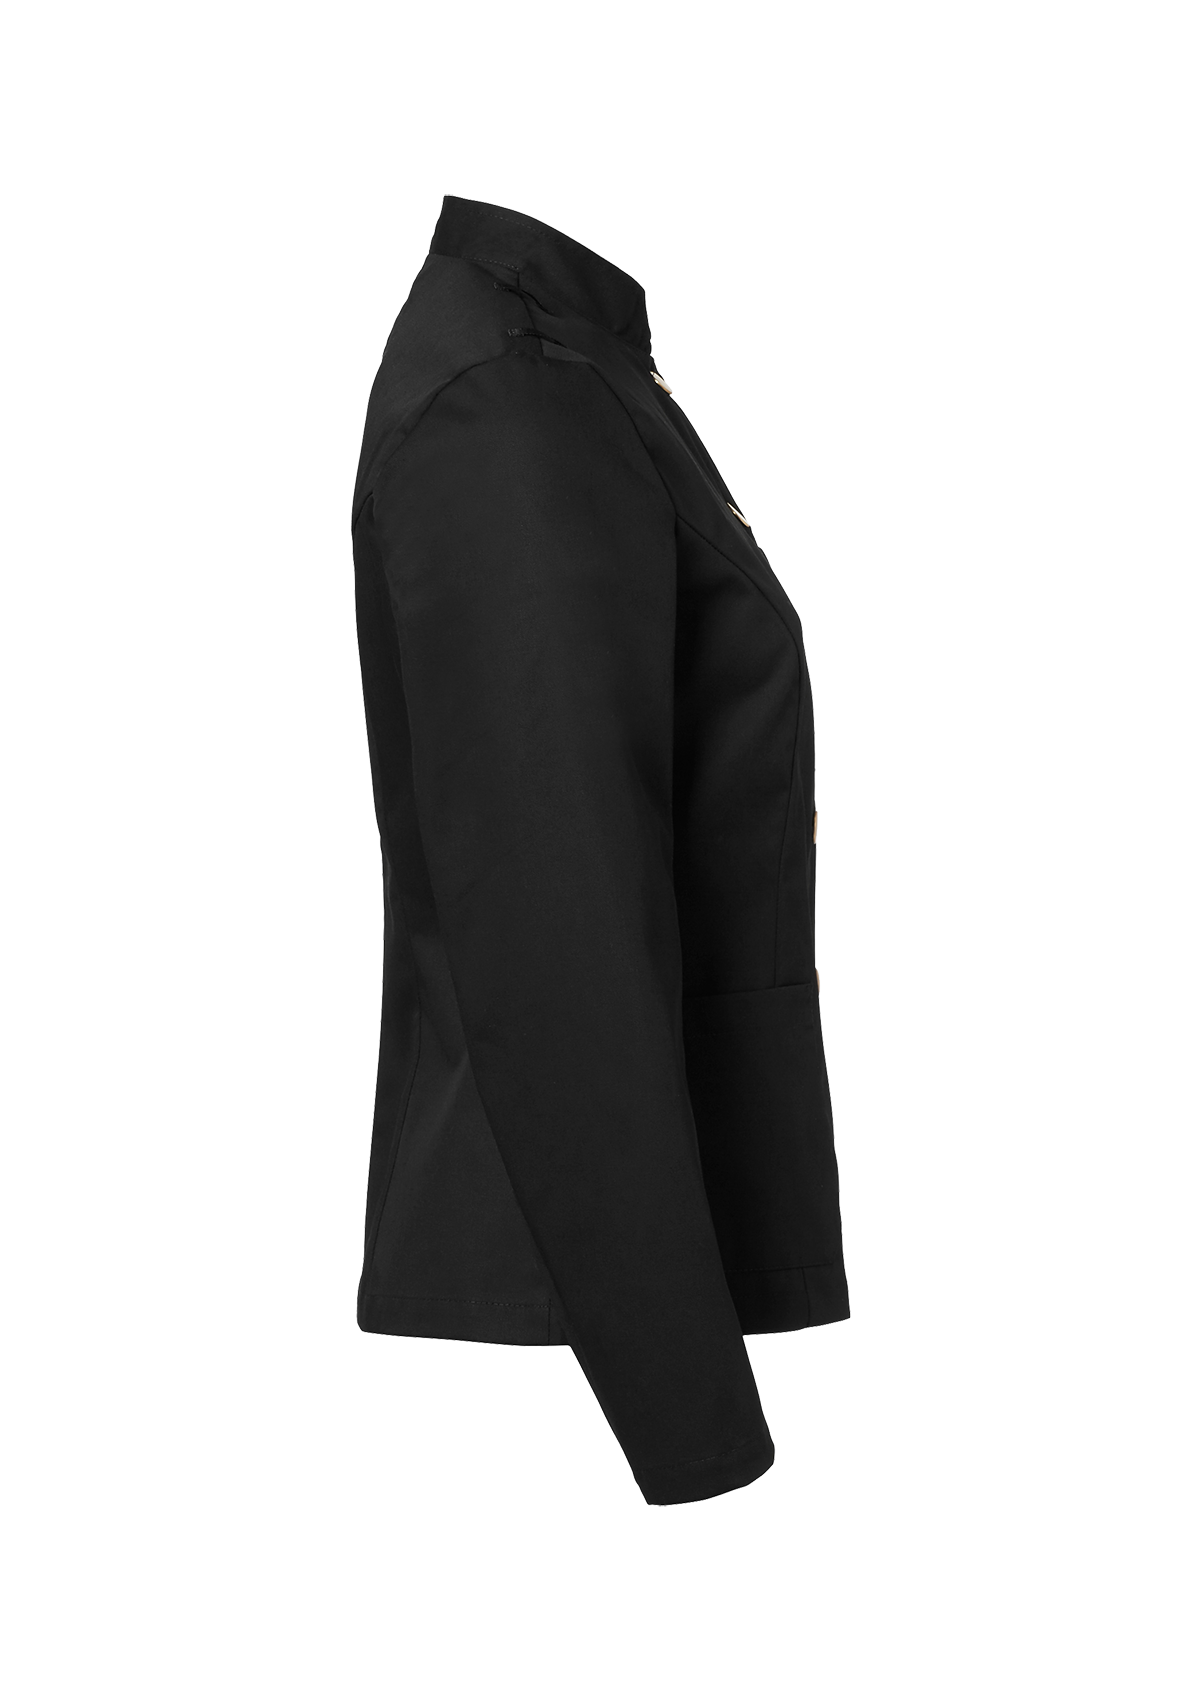 Women's waiter jacket. Segers | Cookniche